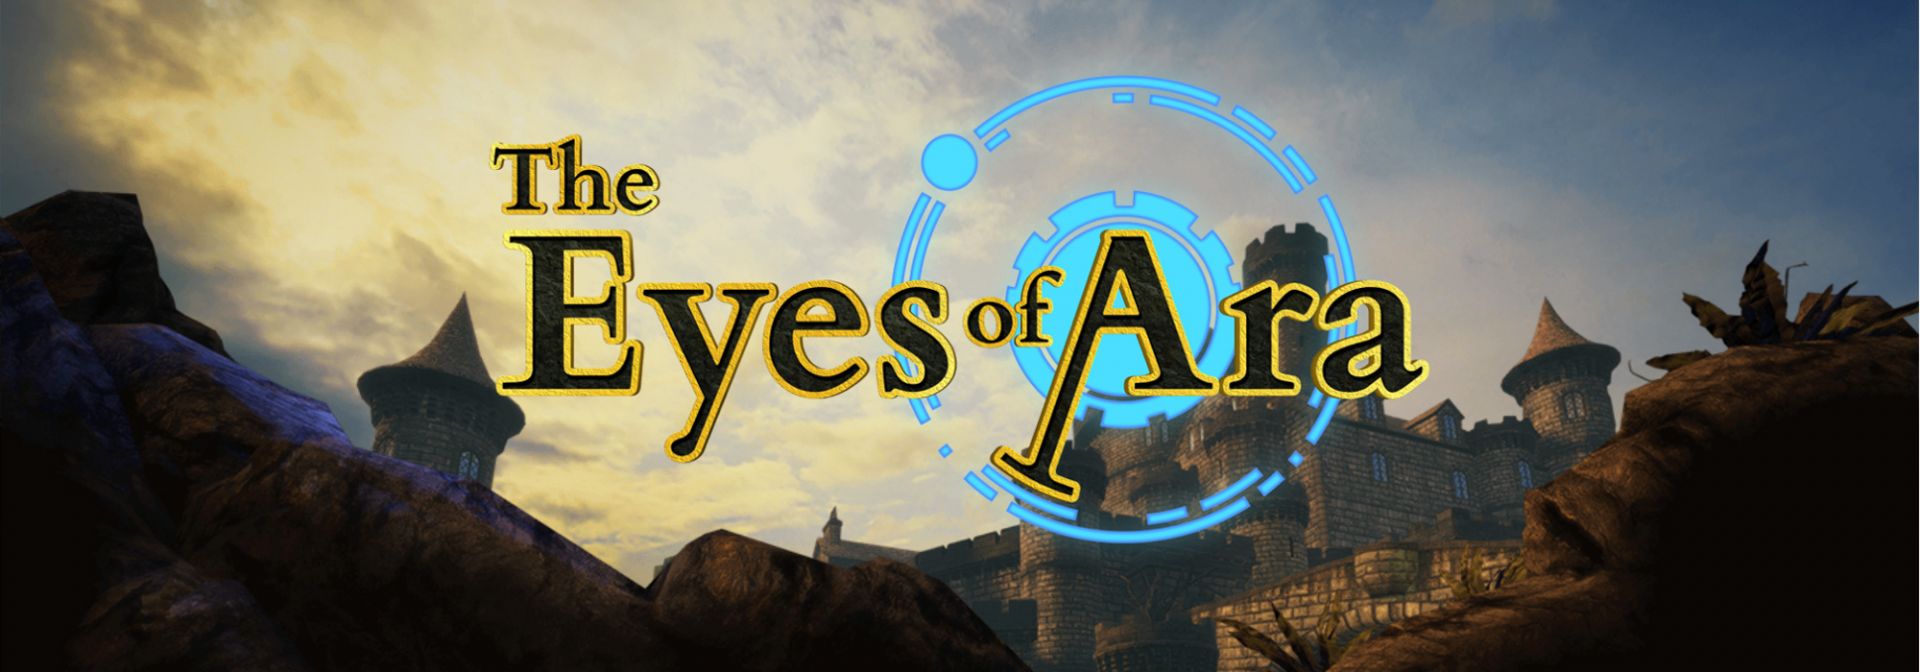 game the eyes of ara